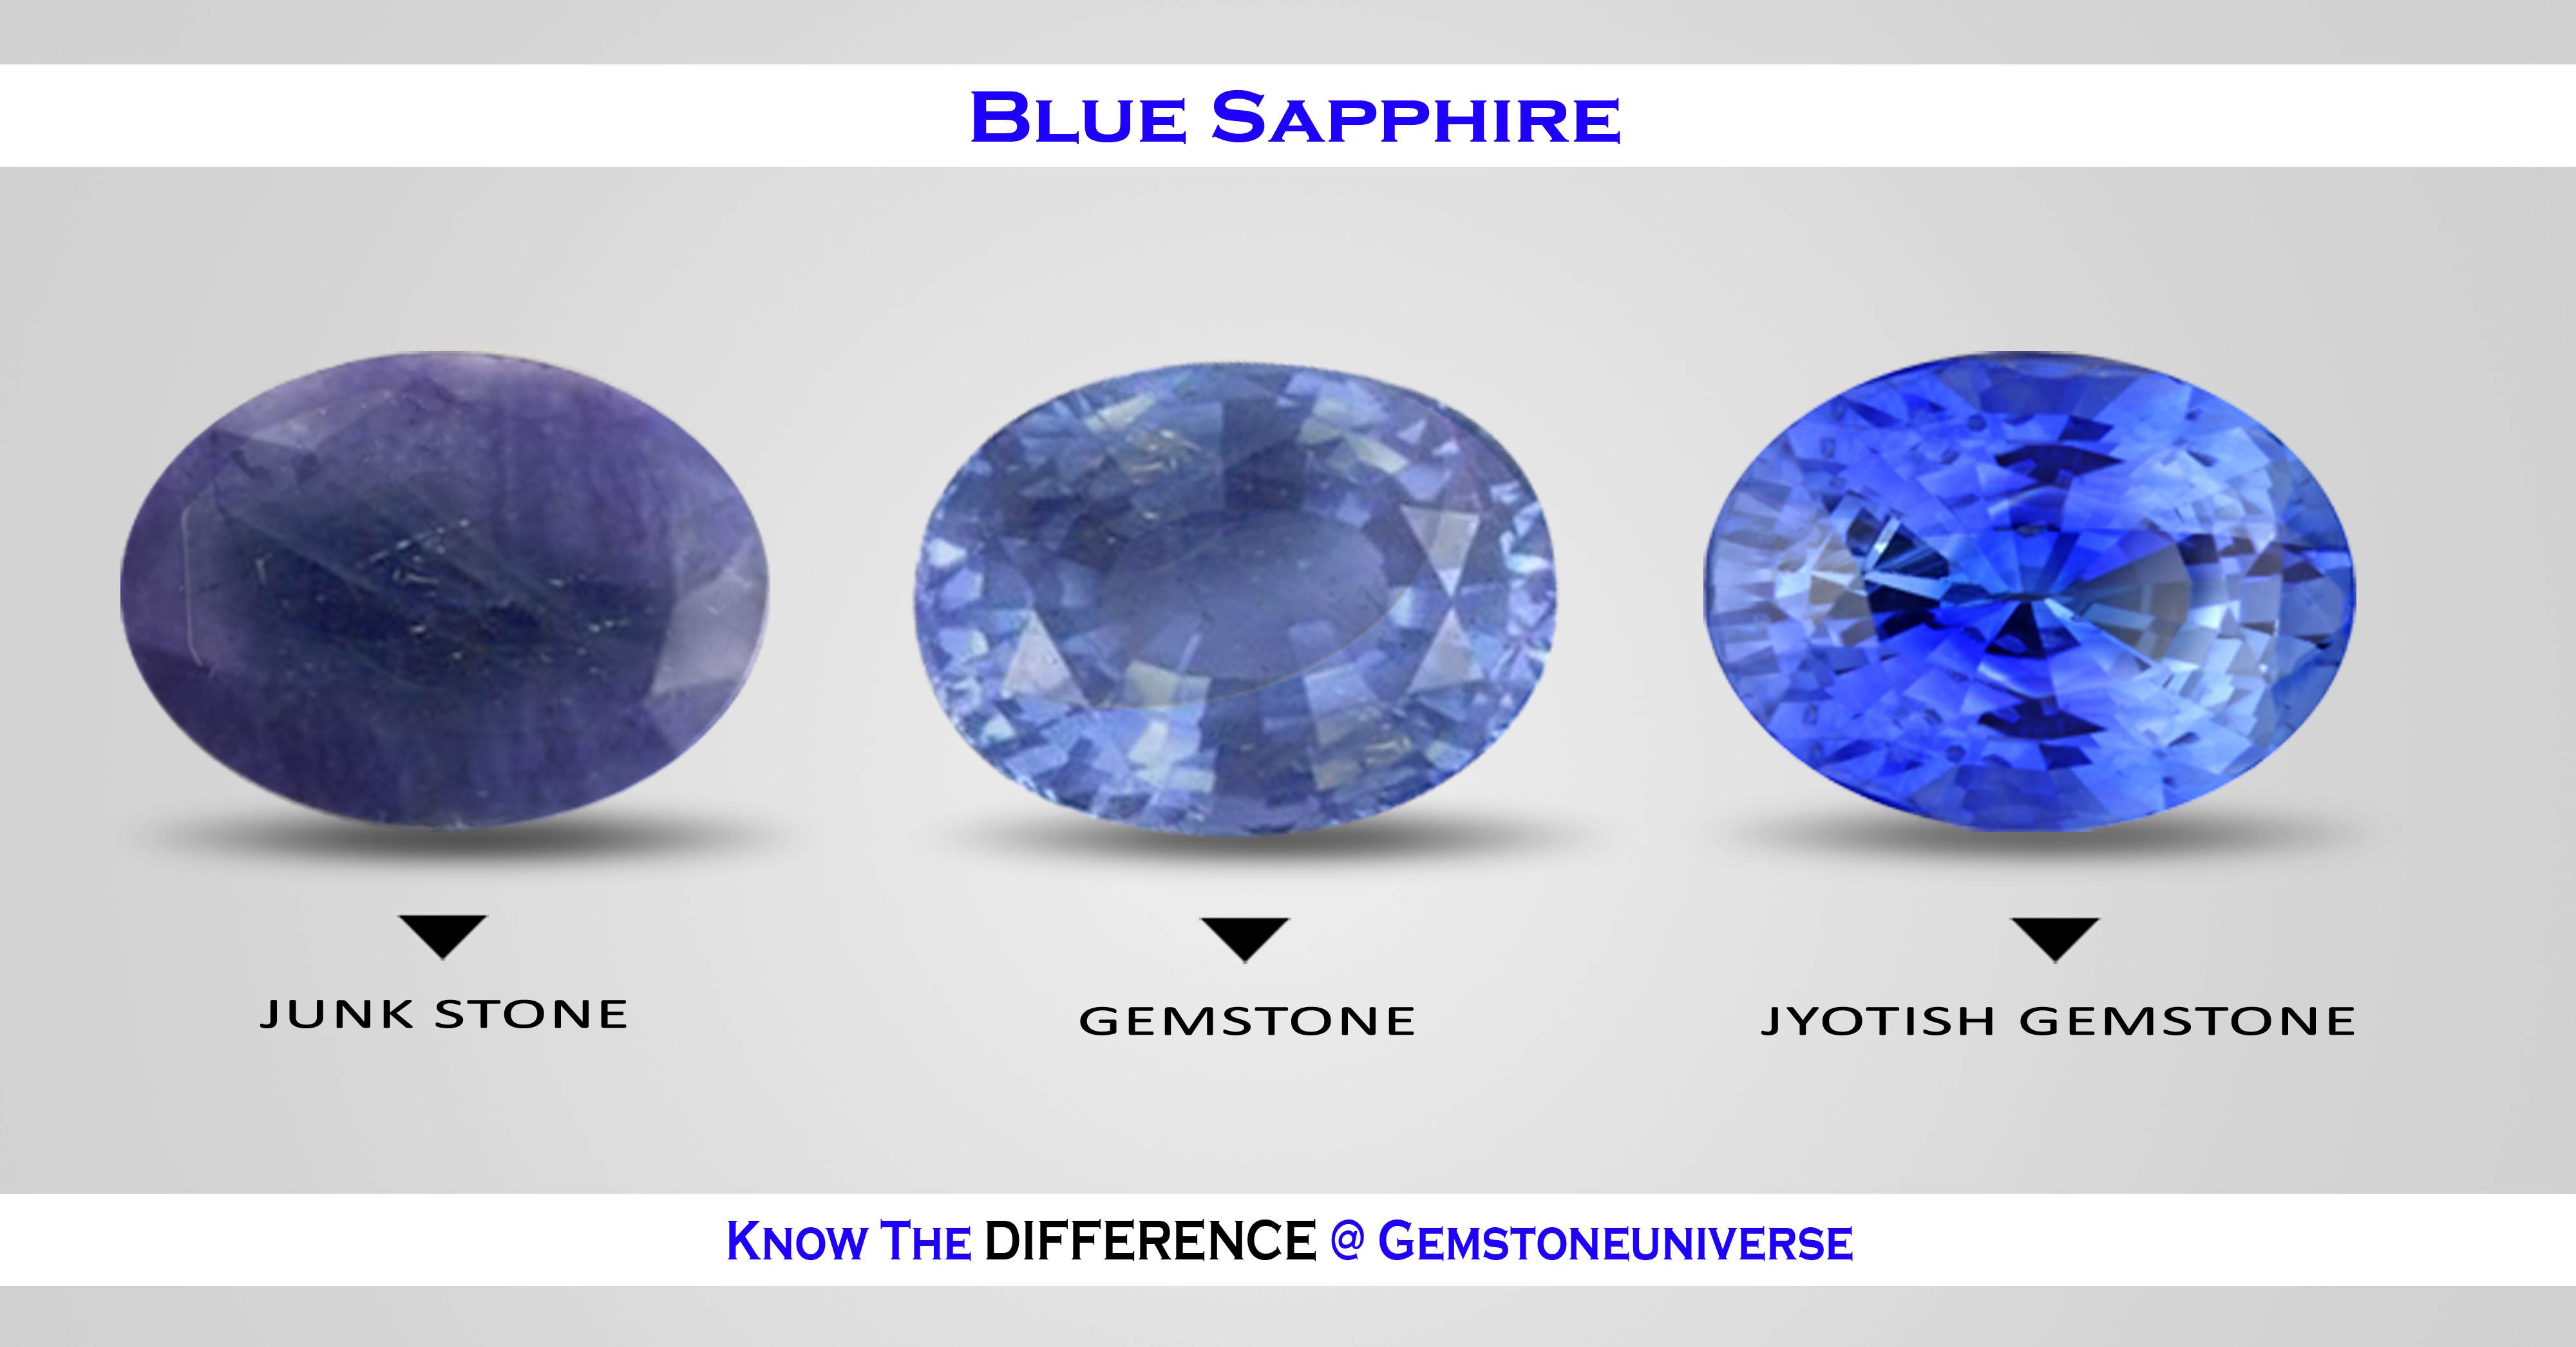 Stone gemstone and jyotish gemstone